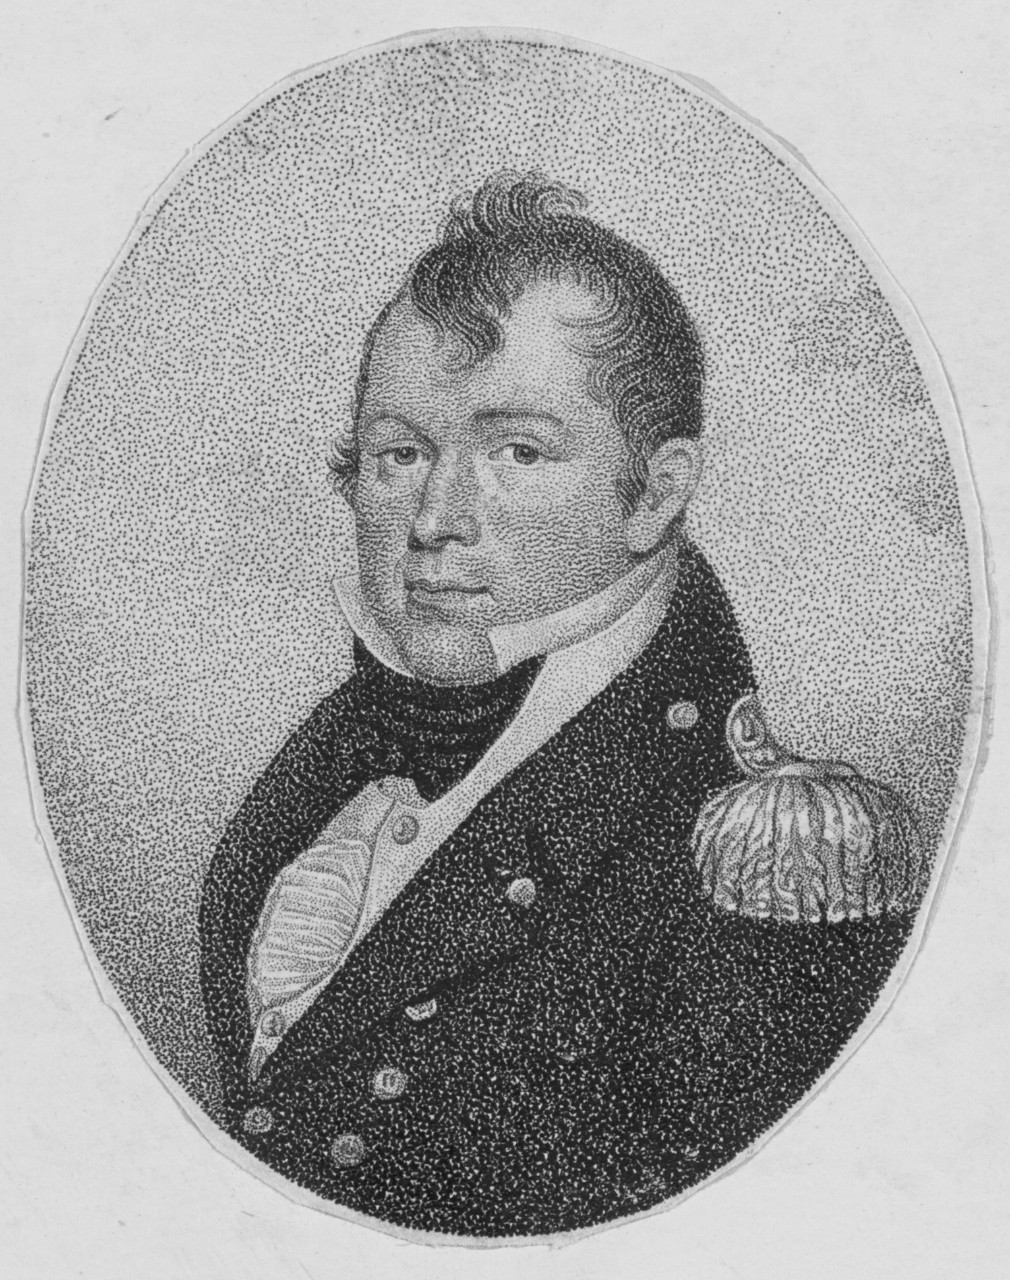 Commodore Jesse D. Elliott, USN